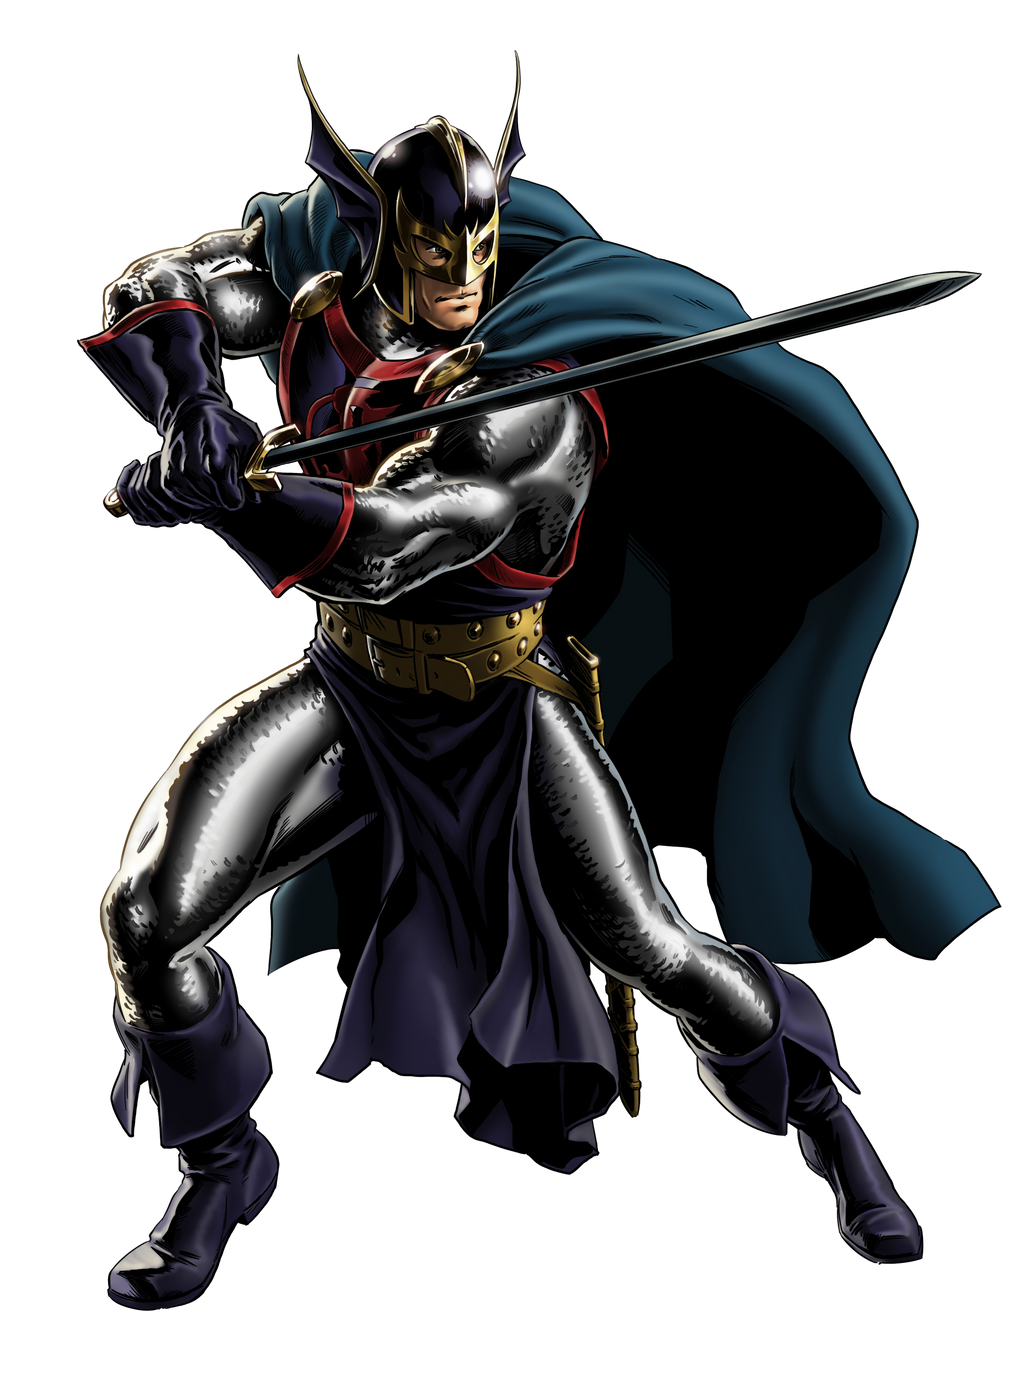 Marvel Avengers Alliance Black Knight By Ratatrampa87 On Deviantart